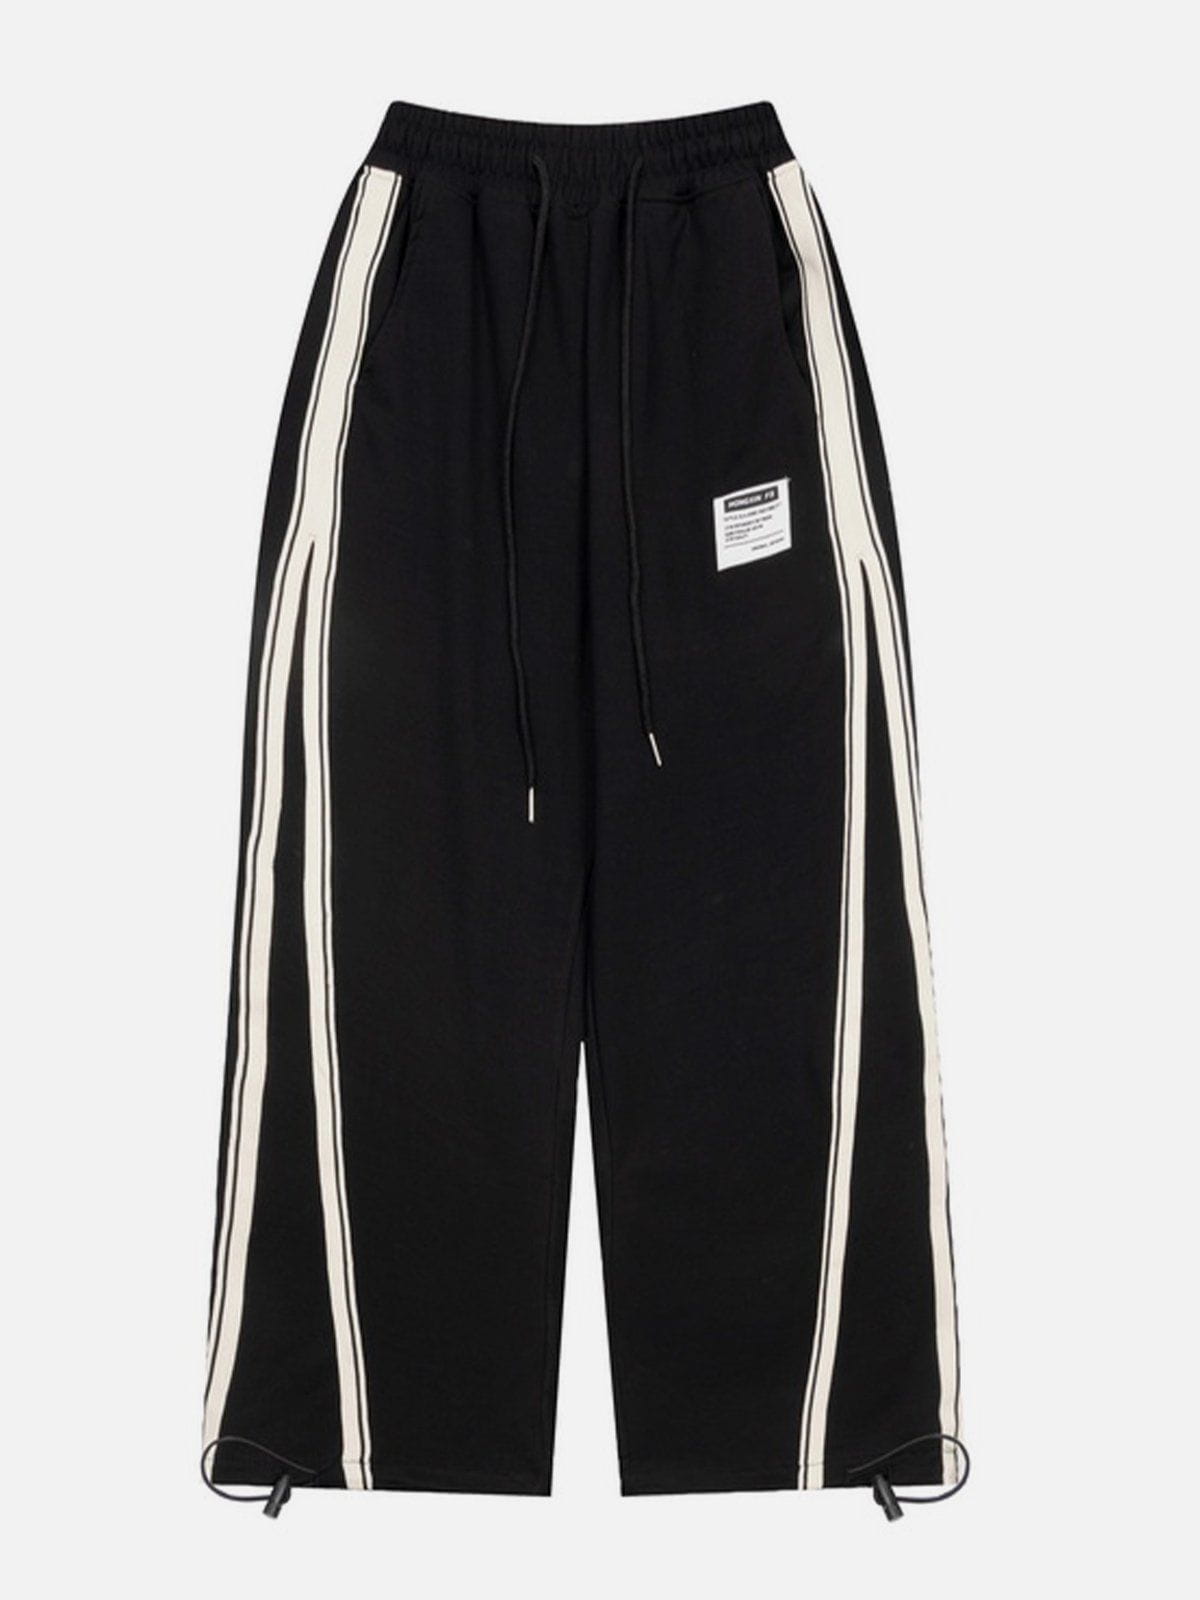 Majesda® - Leg Retractable Striped Drawstring Sweatpants outfit ideas streetwear fashion